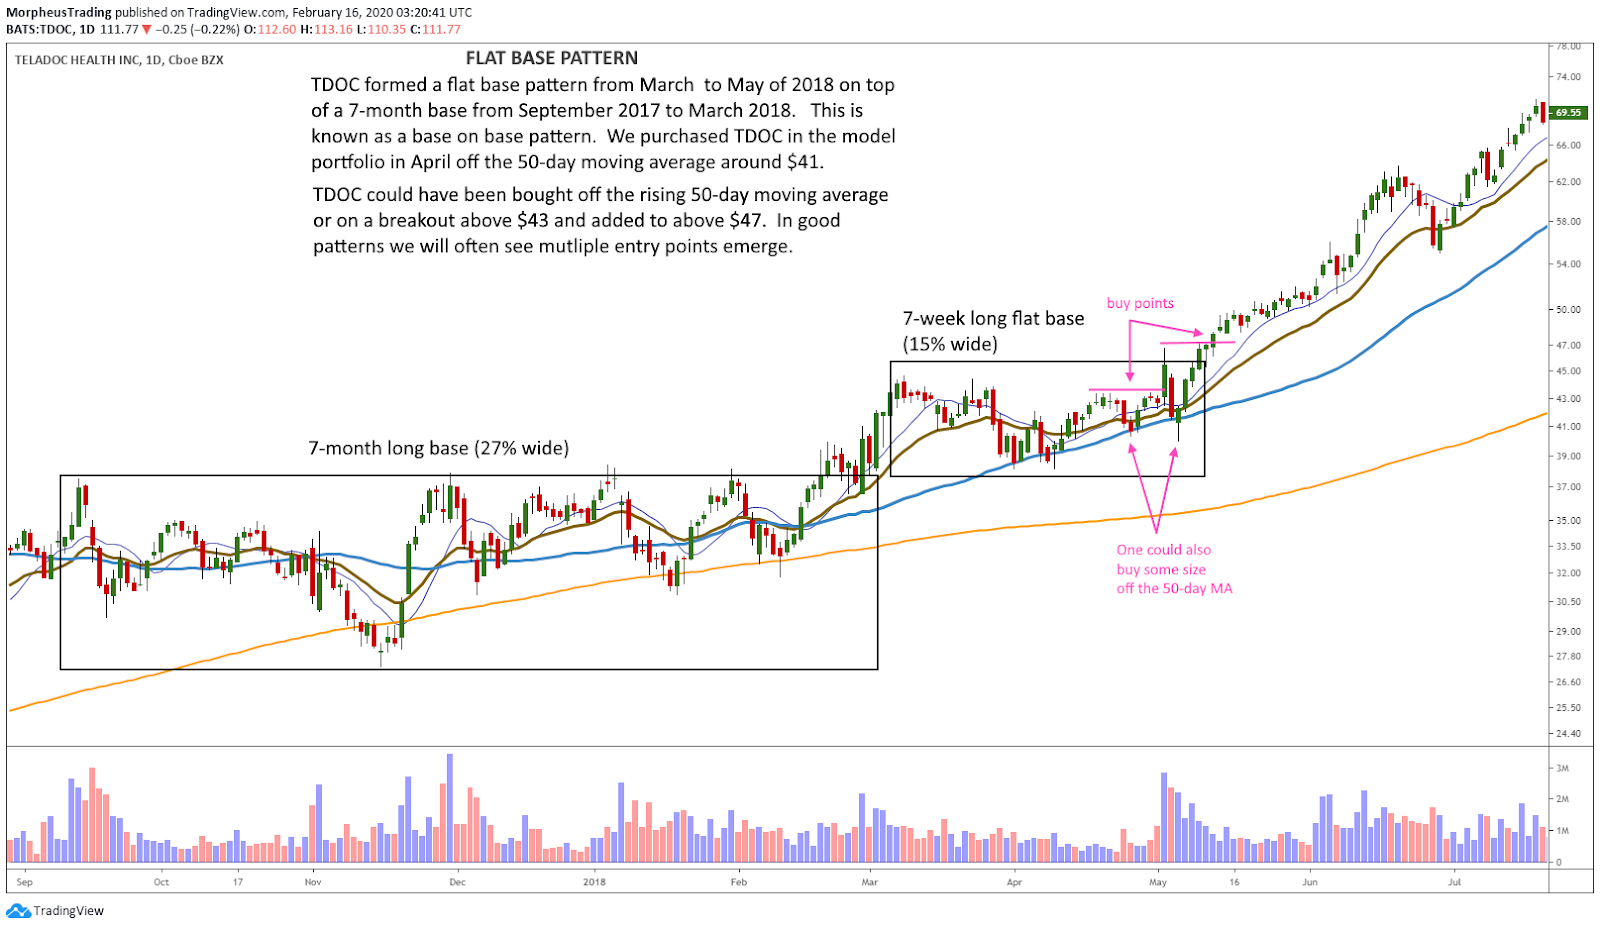 $TAN stock chart - relative strength breakout follow-through